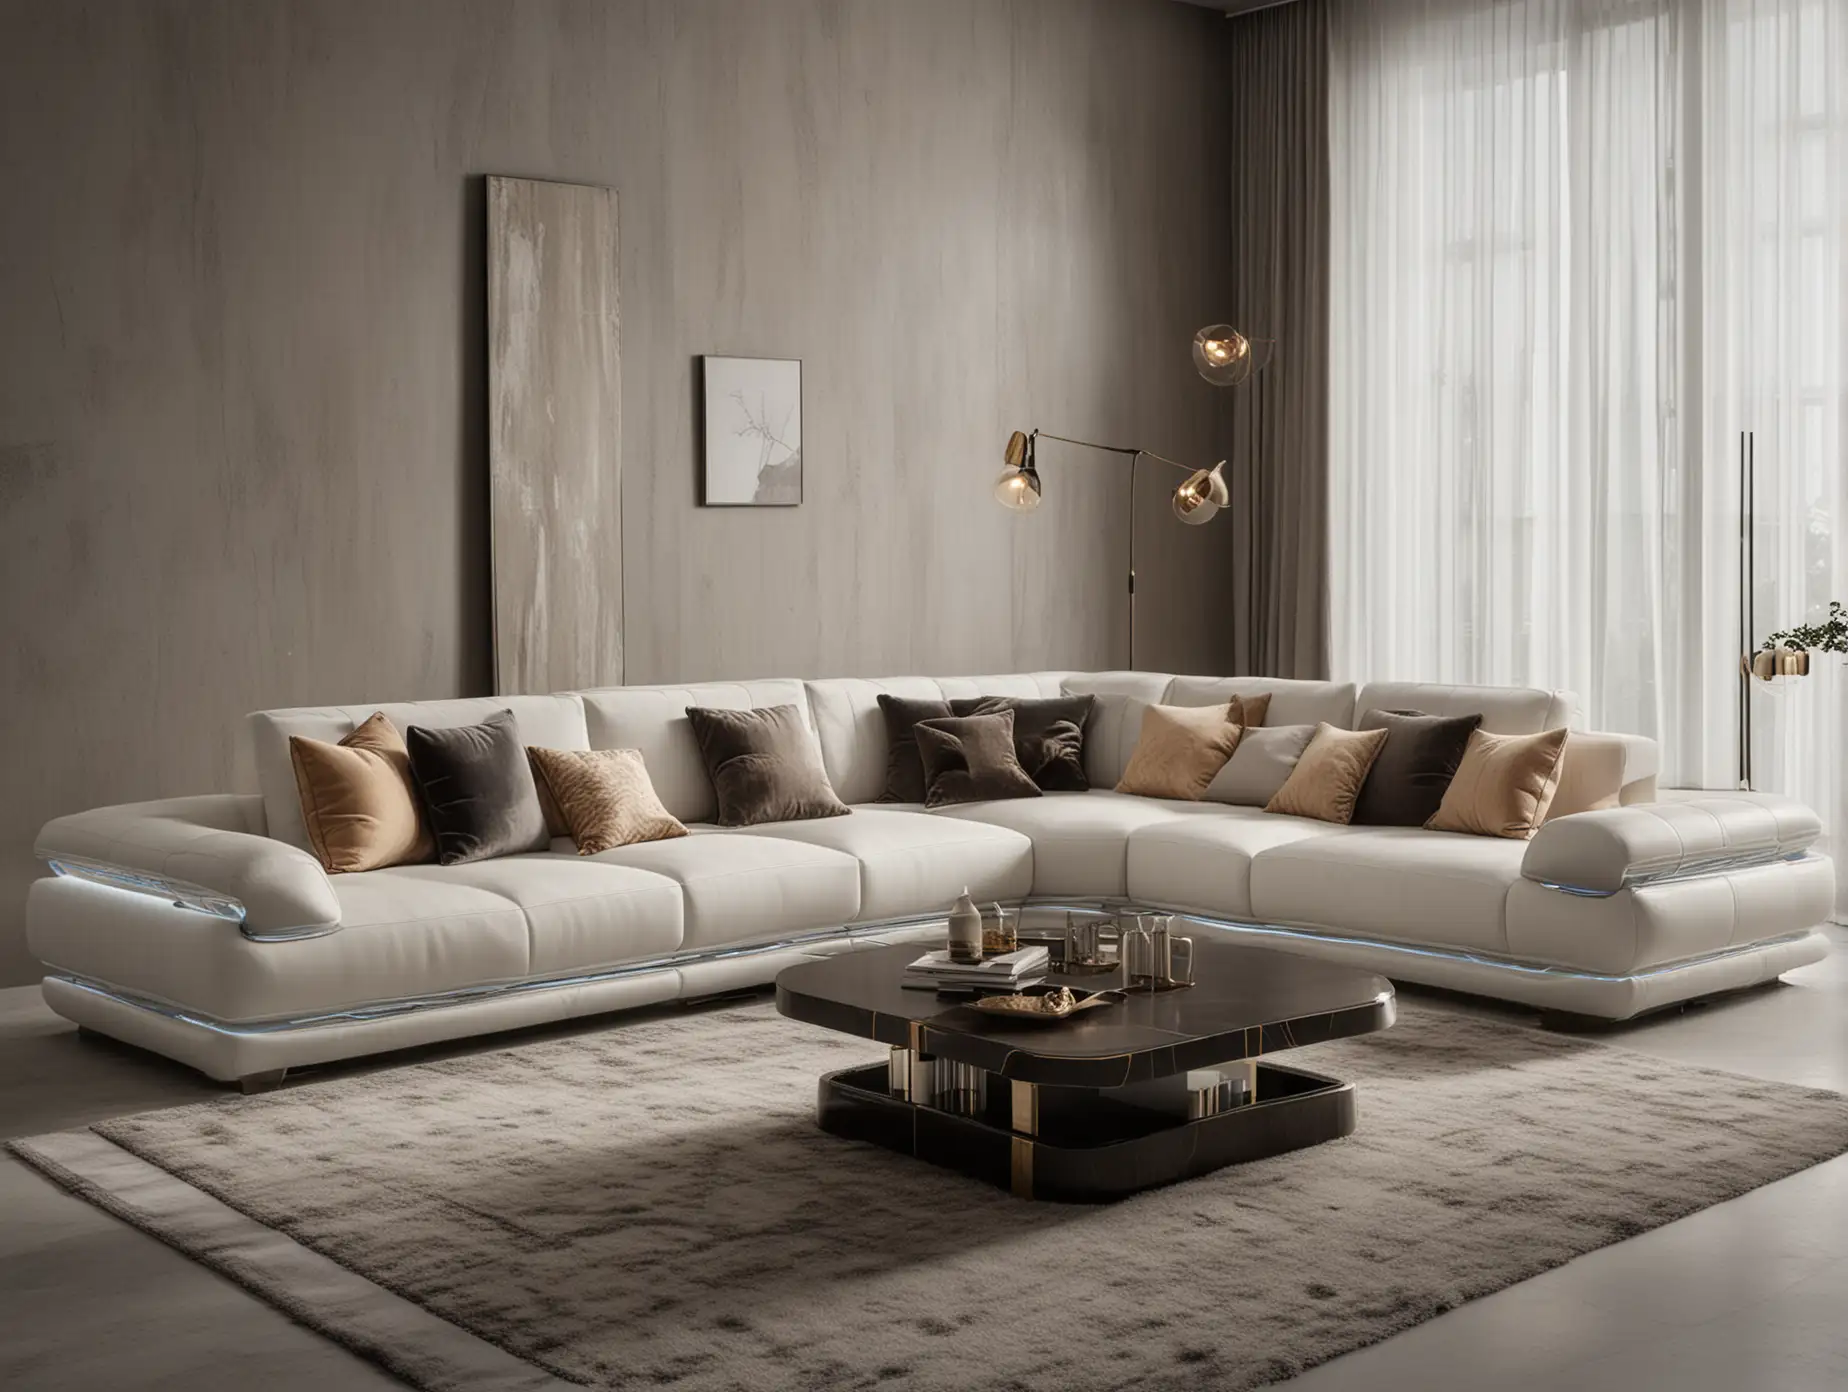 Italian style sofa design with Turkish touches, modern lines, minimal LED detail,3 seats,corner sofa.